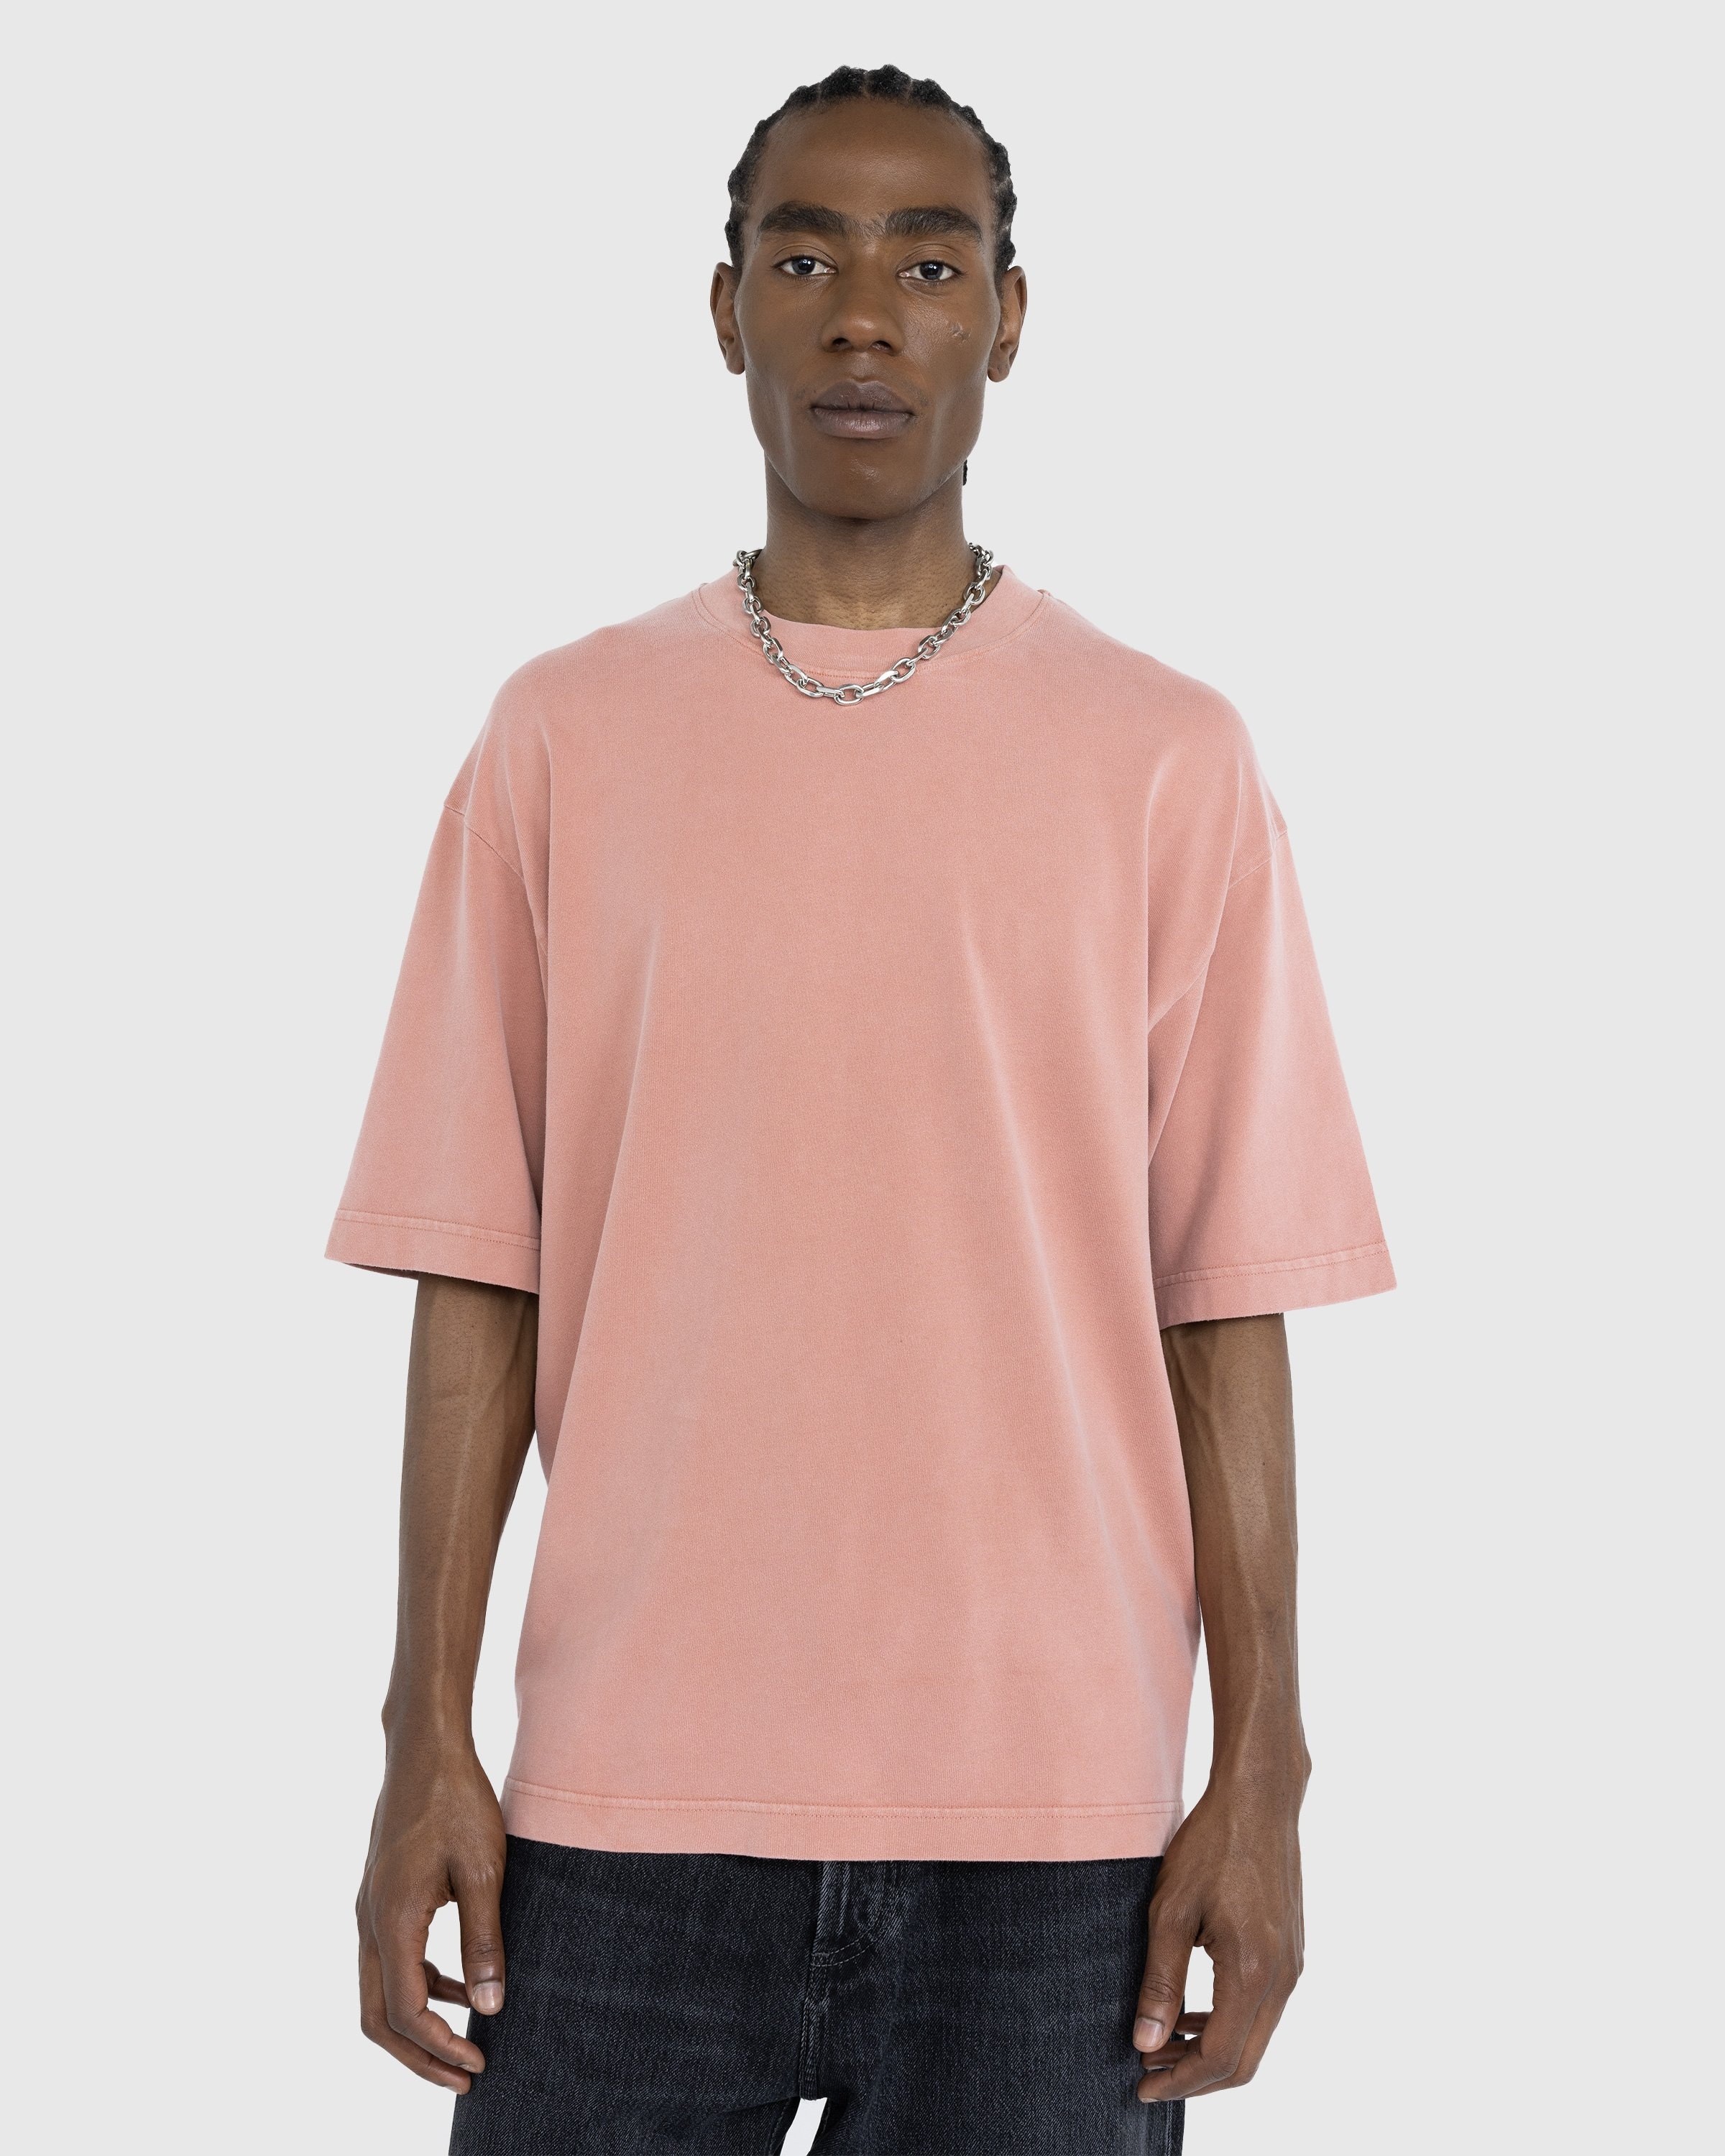 Acne Studios – Garment Dyed T Shirt Vintage Pink   Highsnobiety Shop